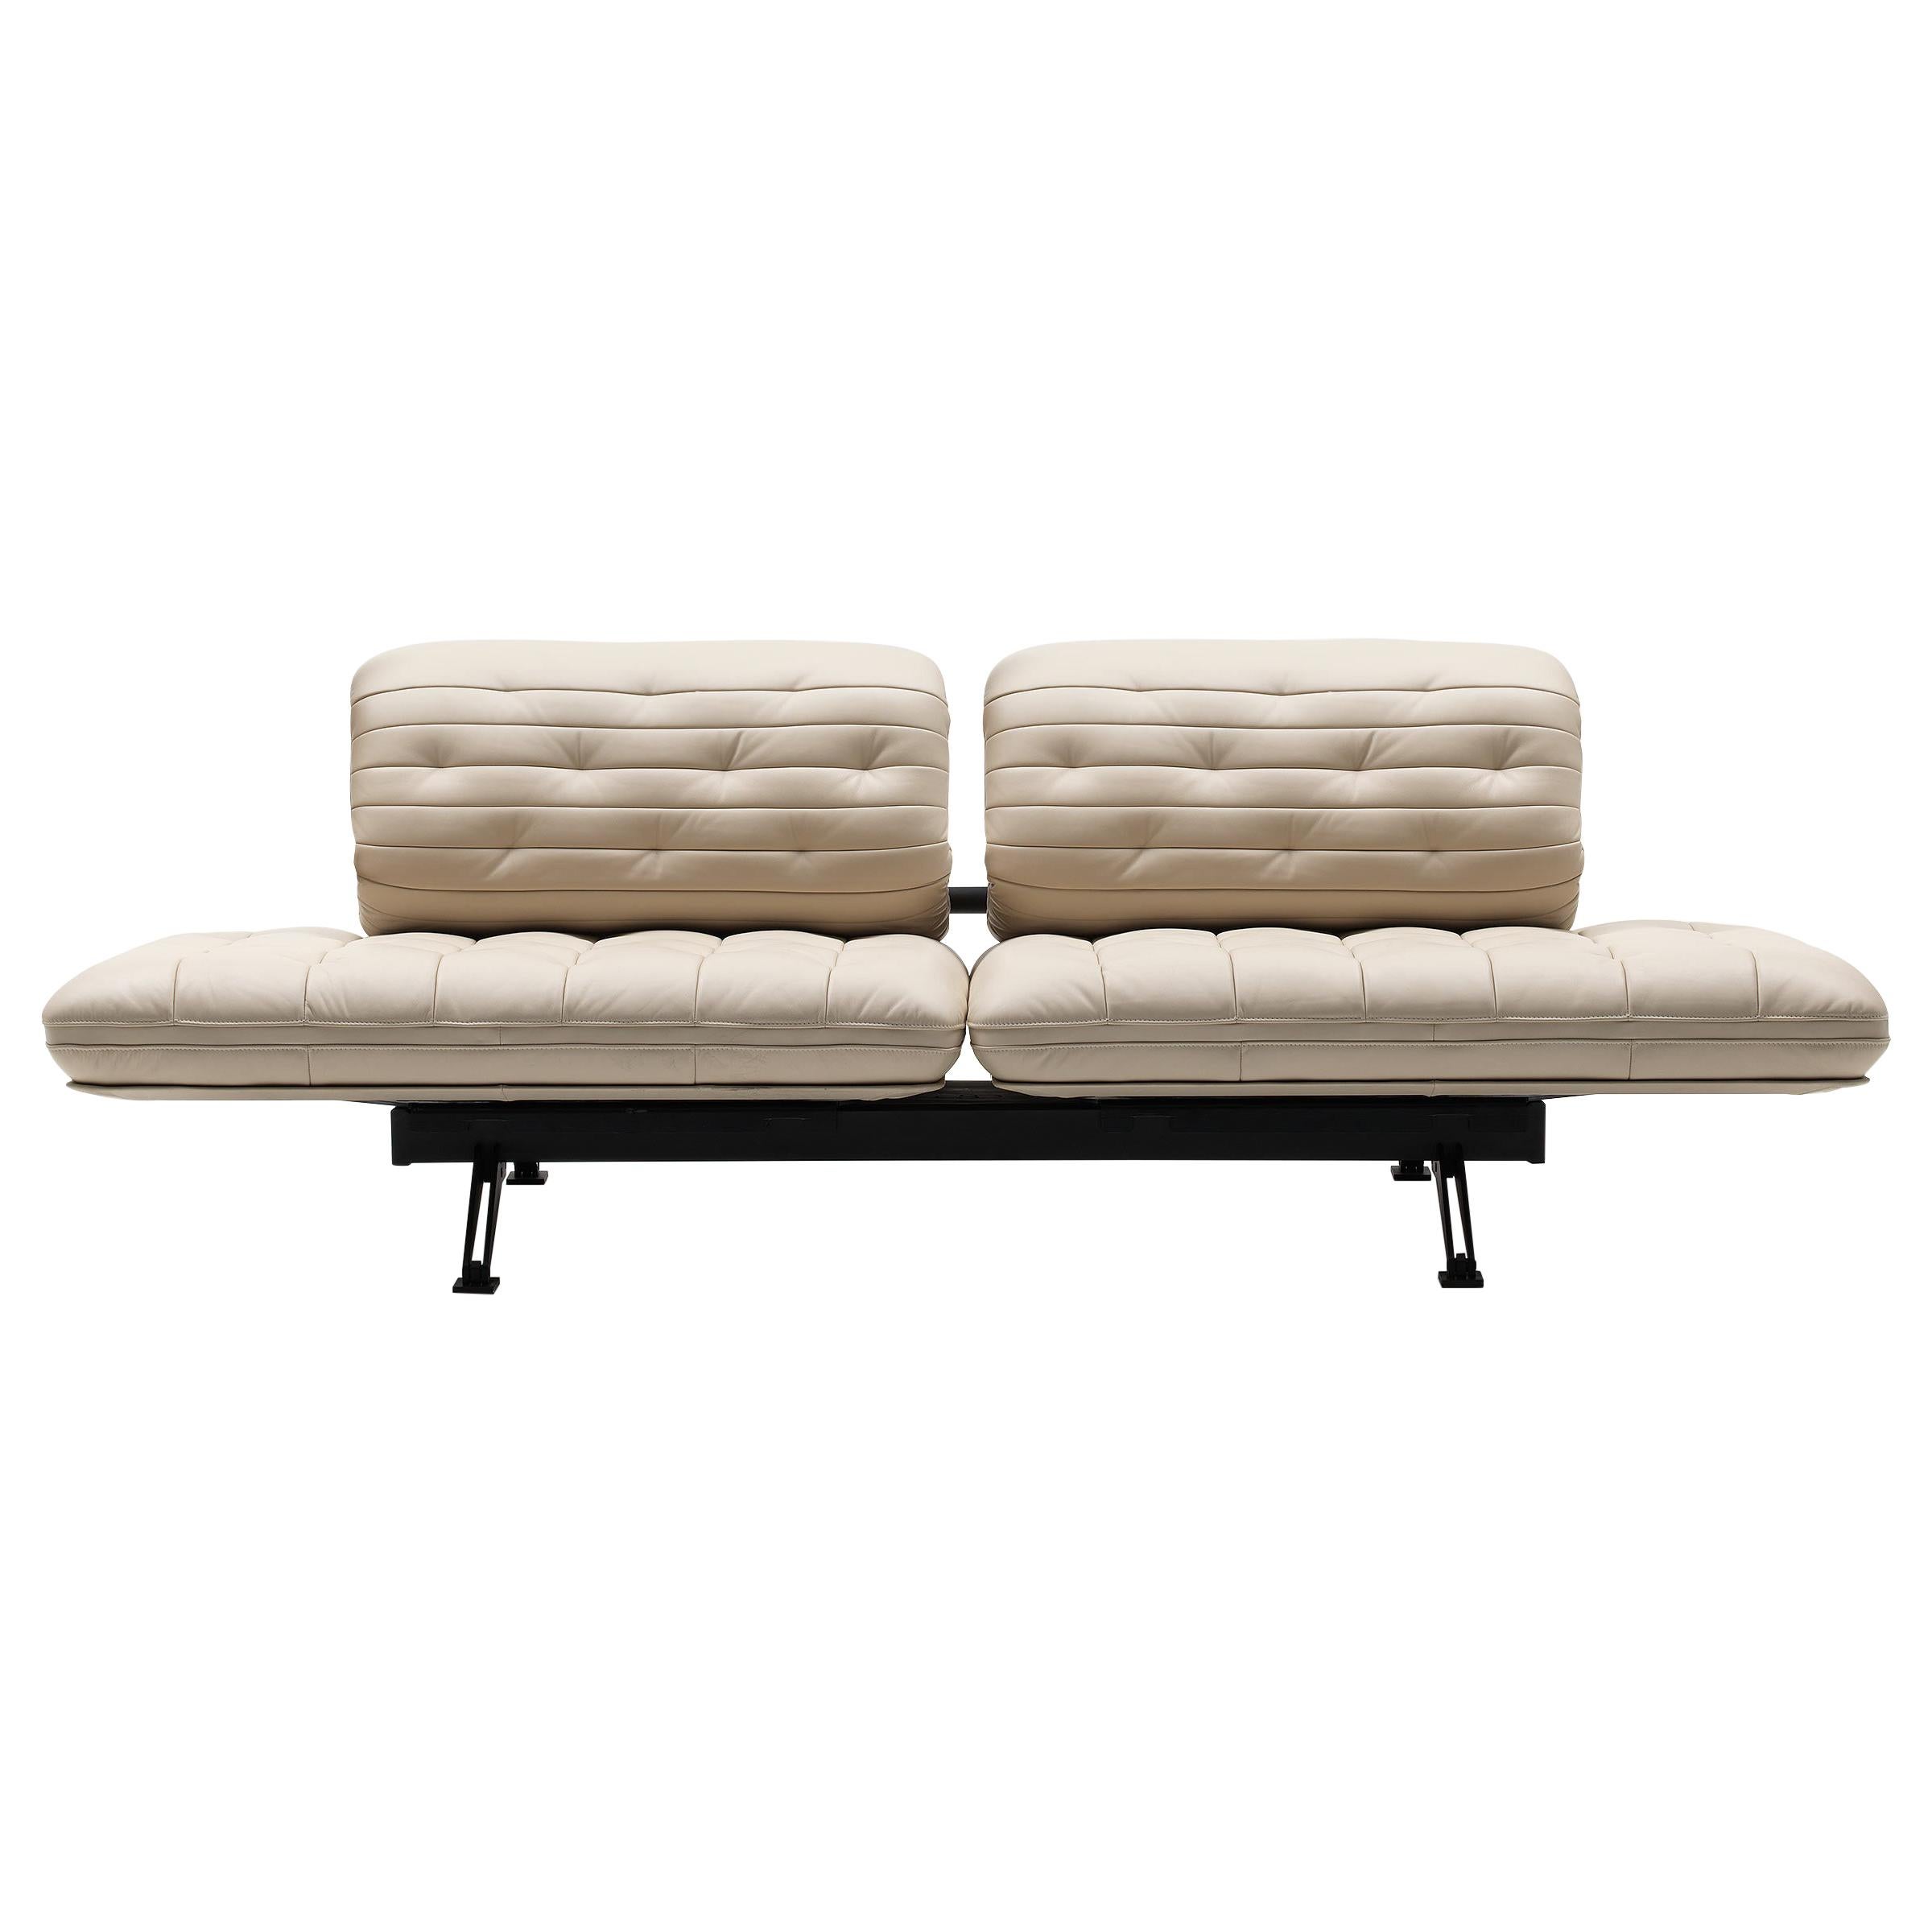 De Sede Ds-490 Modular Sofa in Off-White Upholstery by De Sede Design Team For Sale